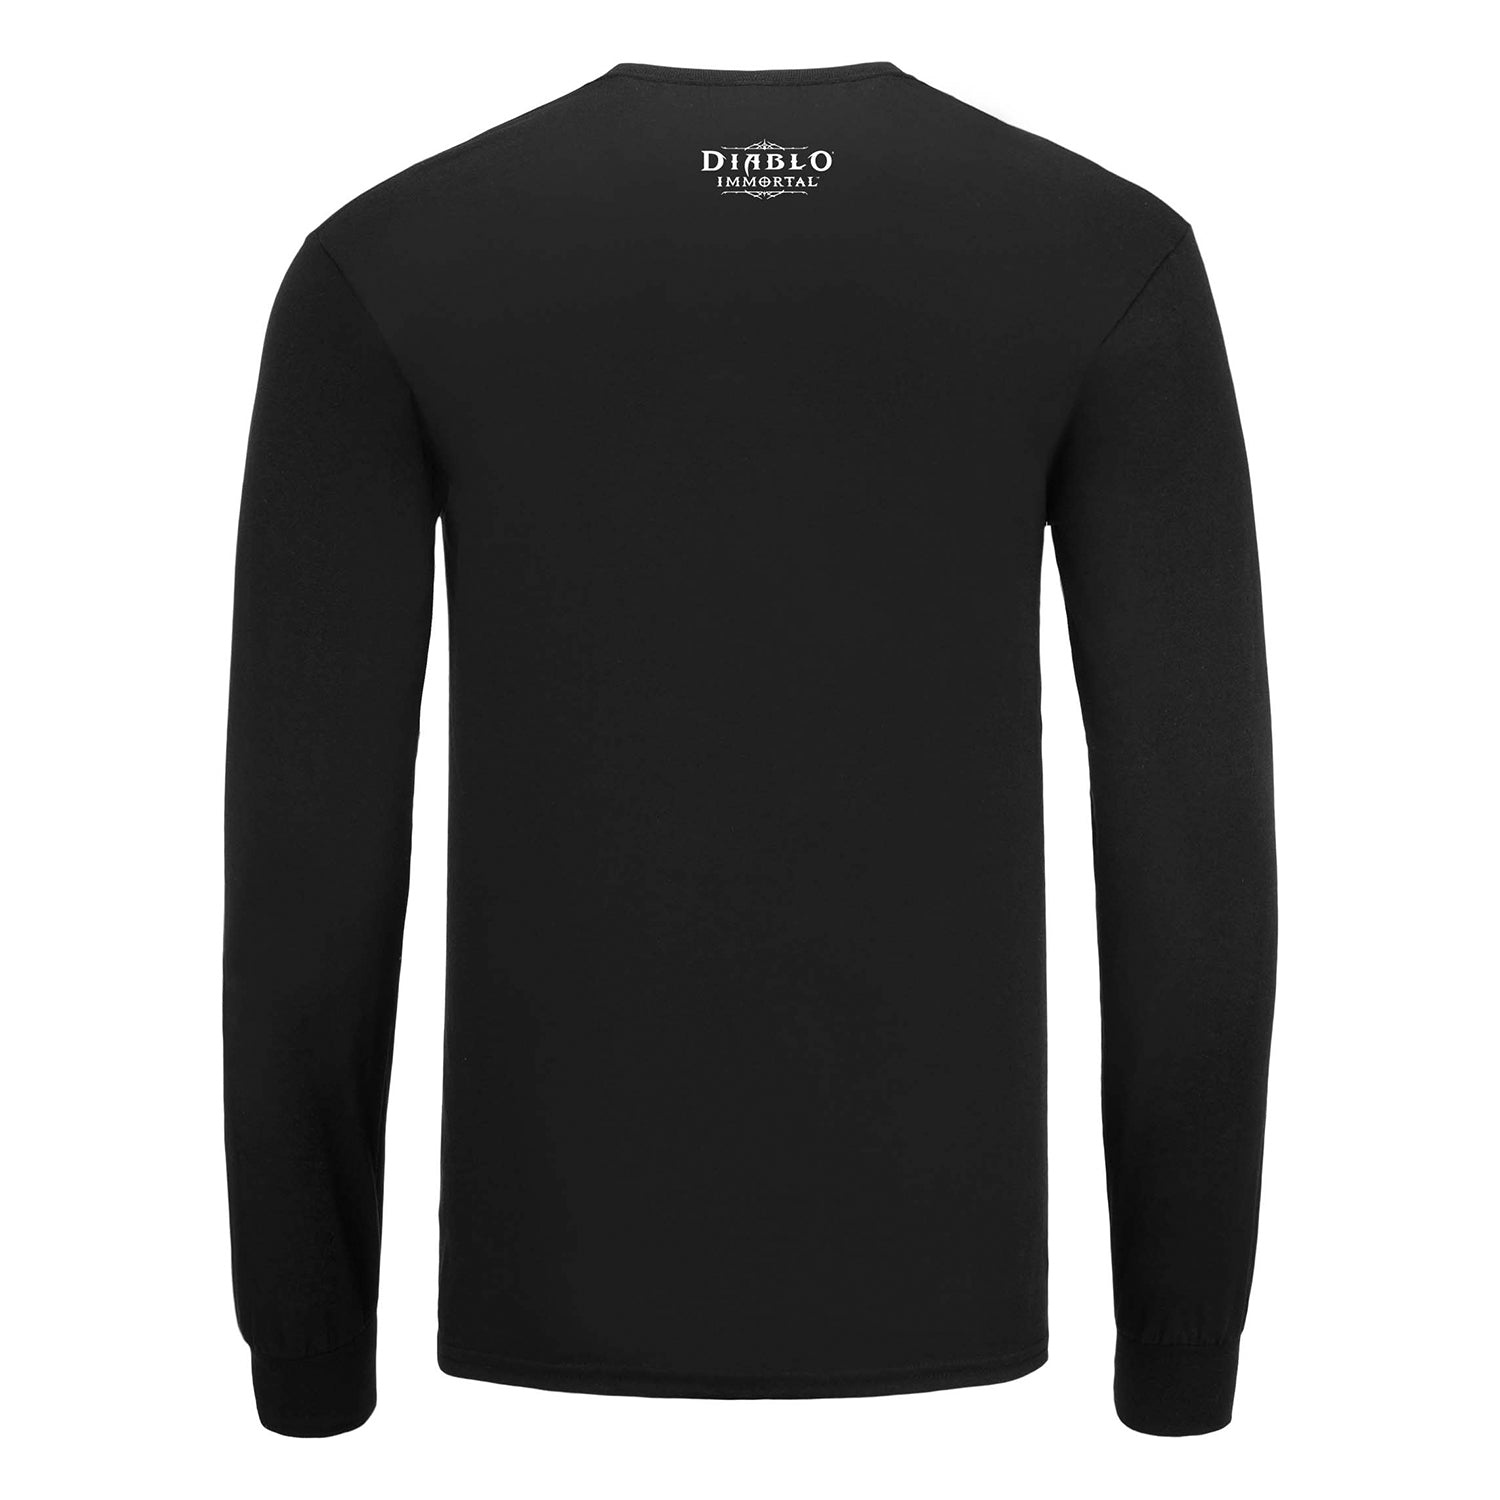 Diablo Immortal Monk High Contrast Black Long Sleeve T-Shirt - Back View